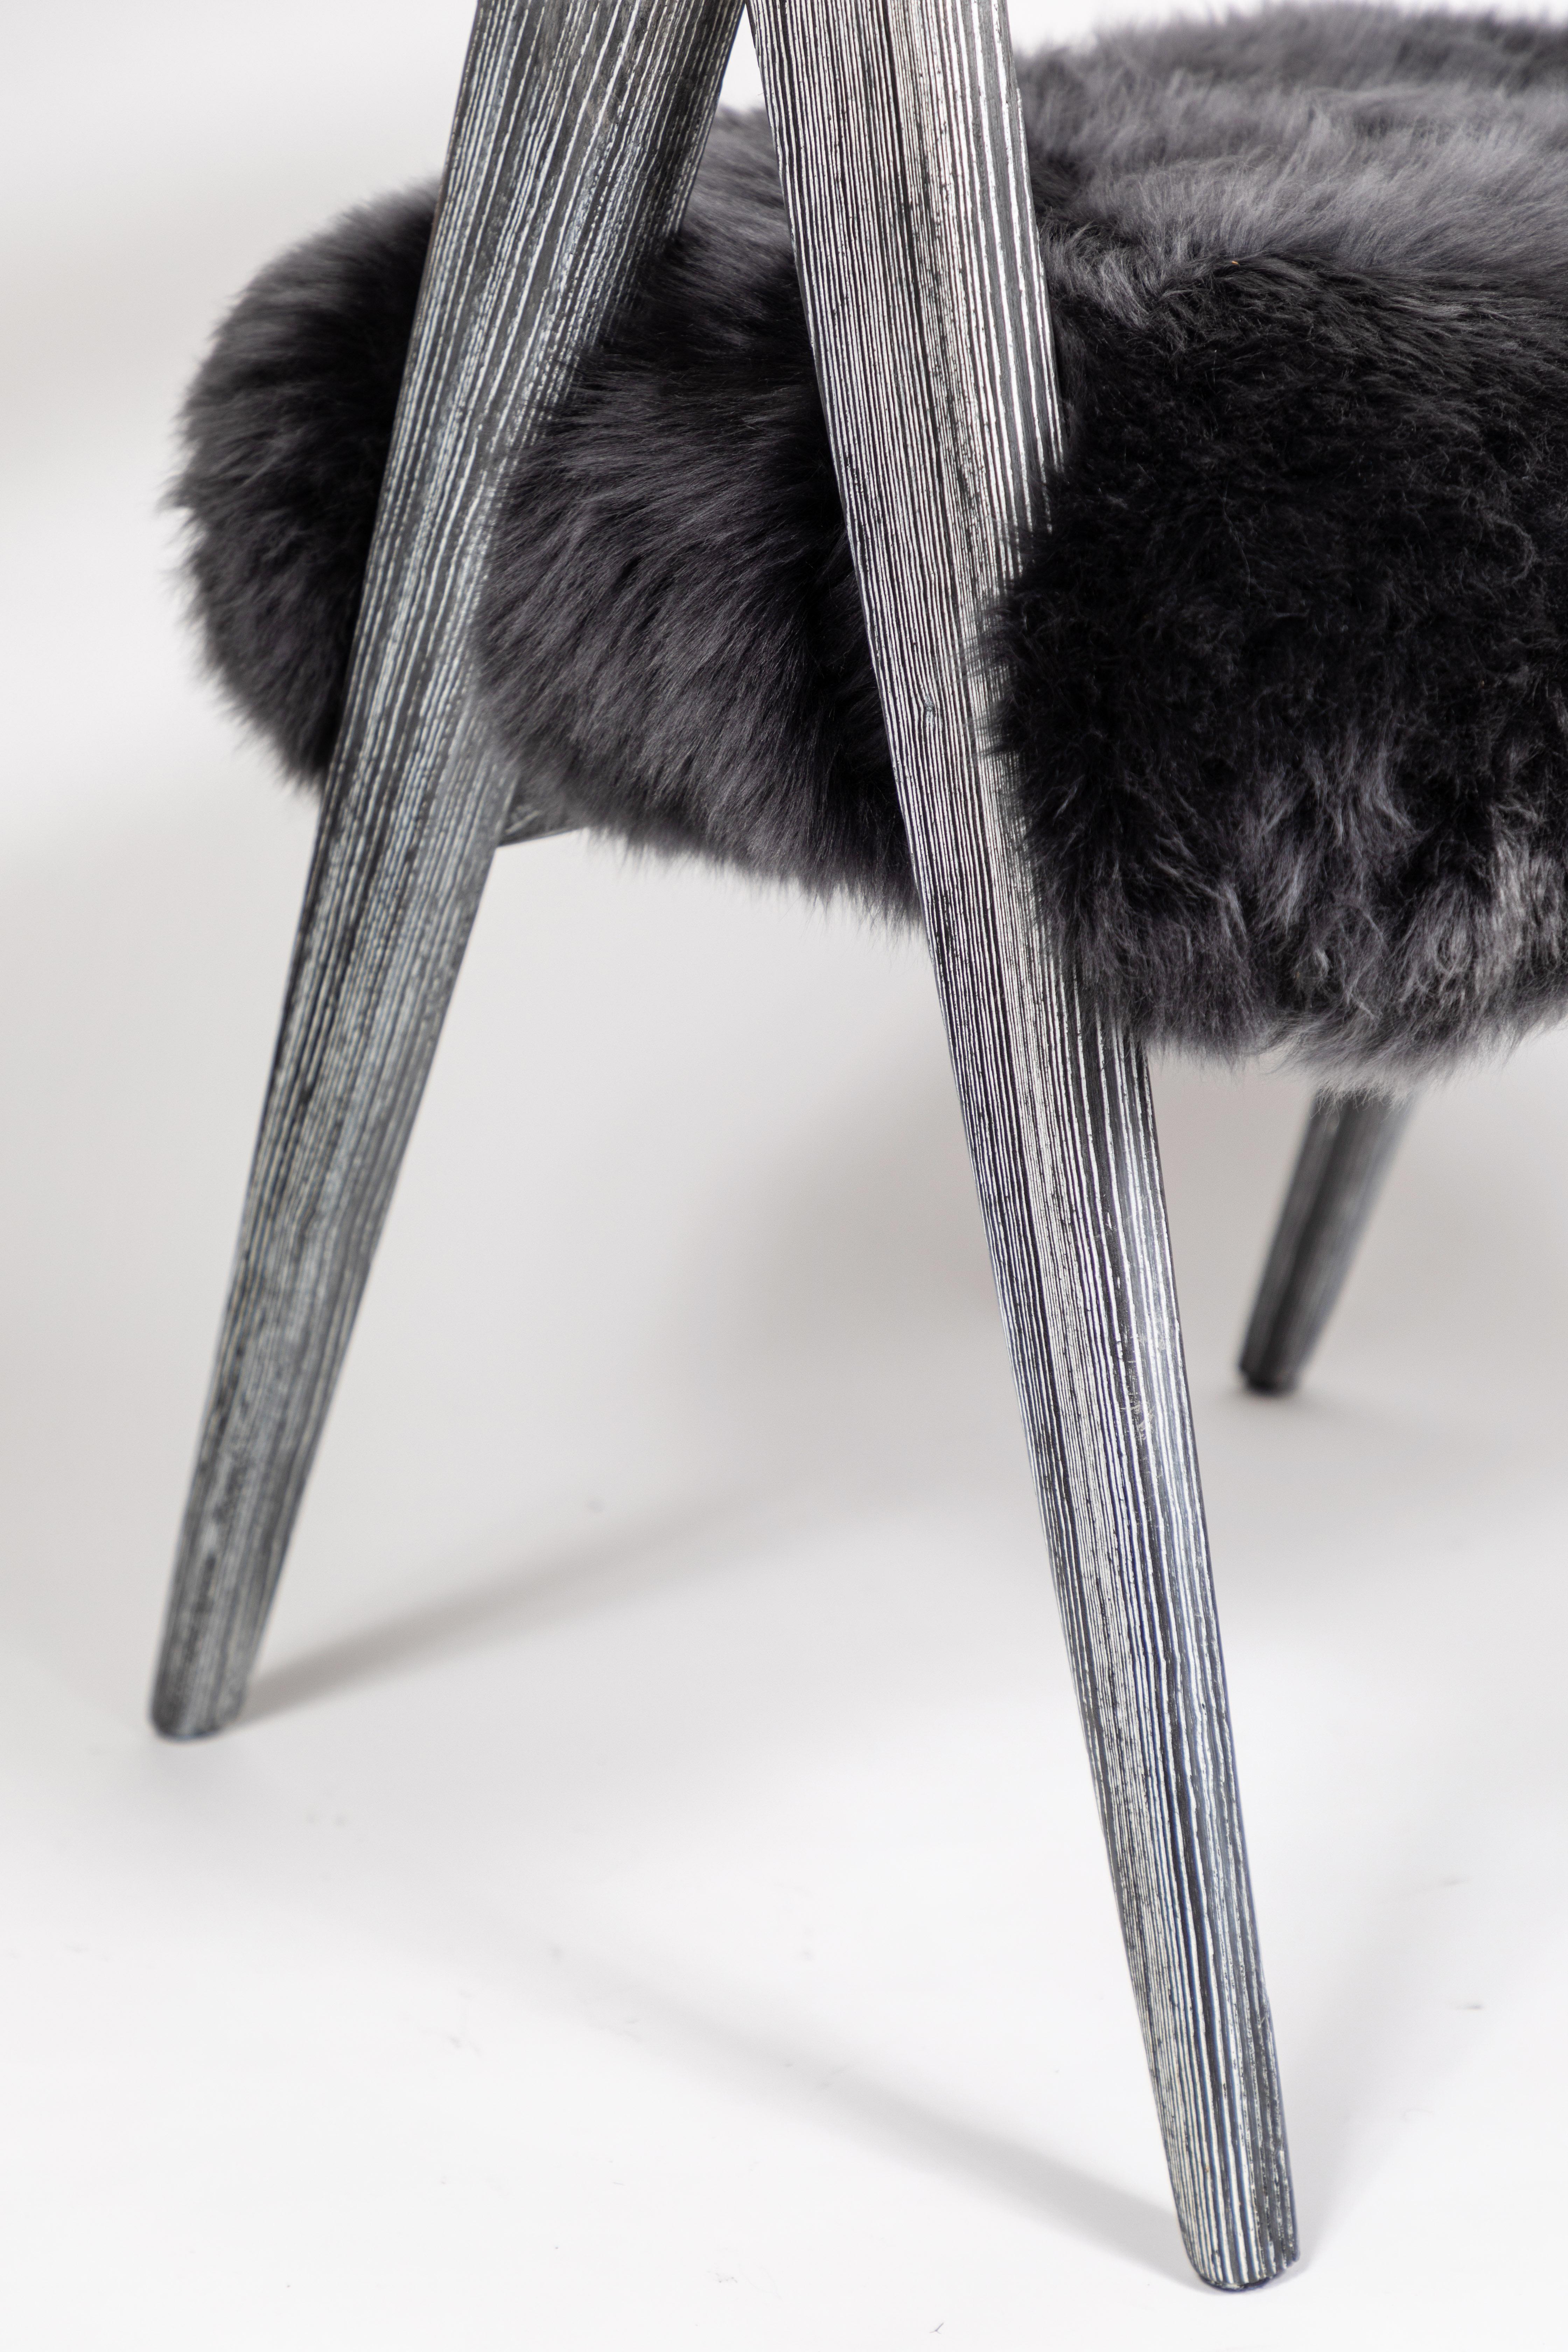 Pair of Midcentury Cerused Wood and Fur Scissor Leg Chairs 1